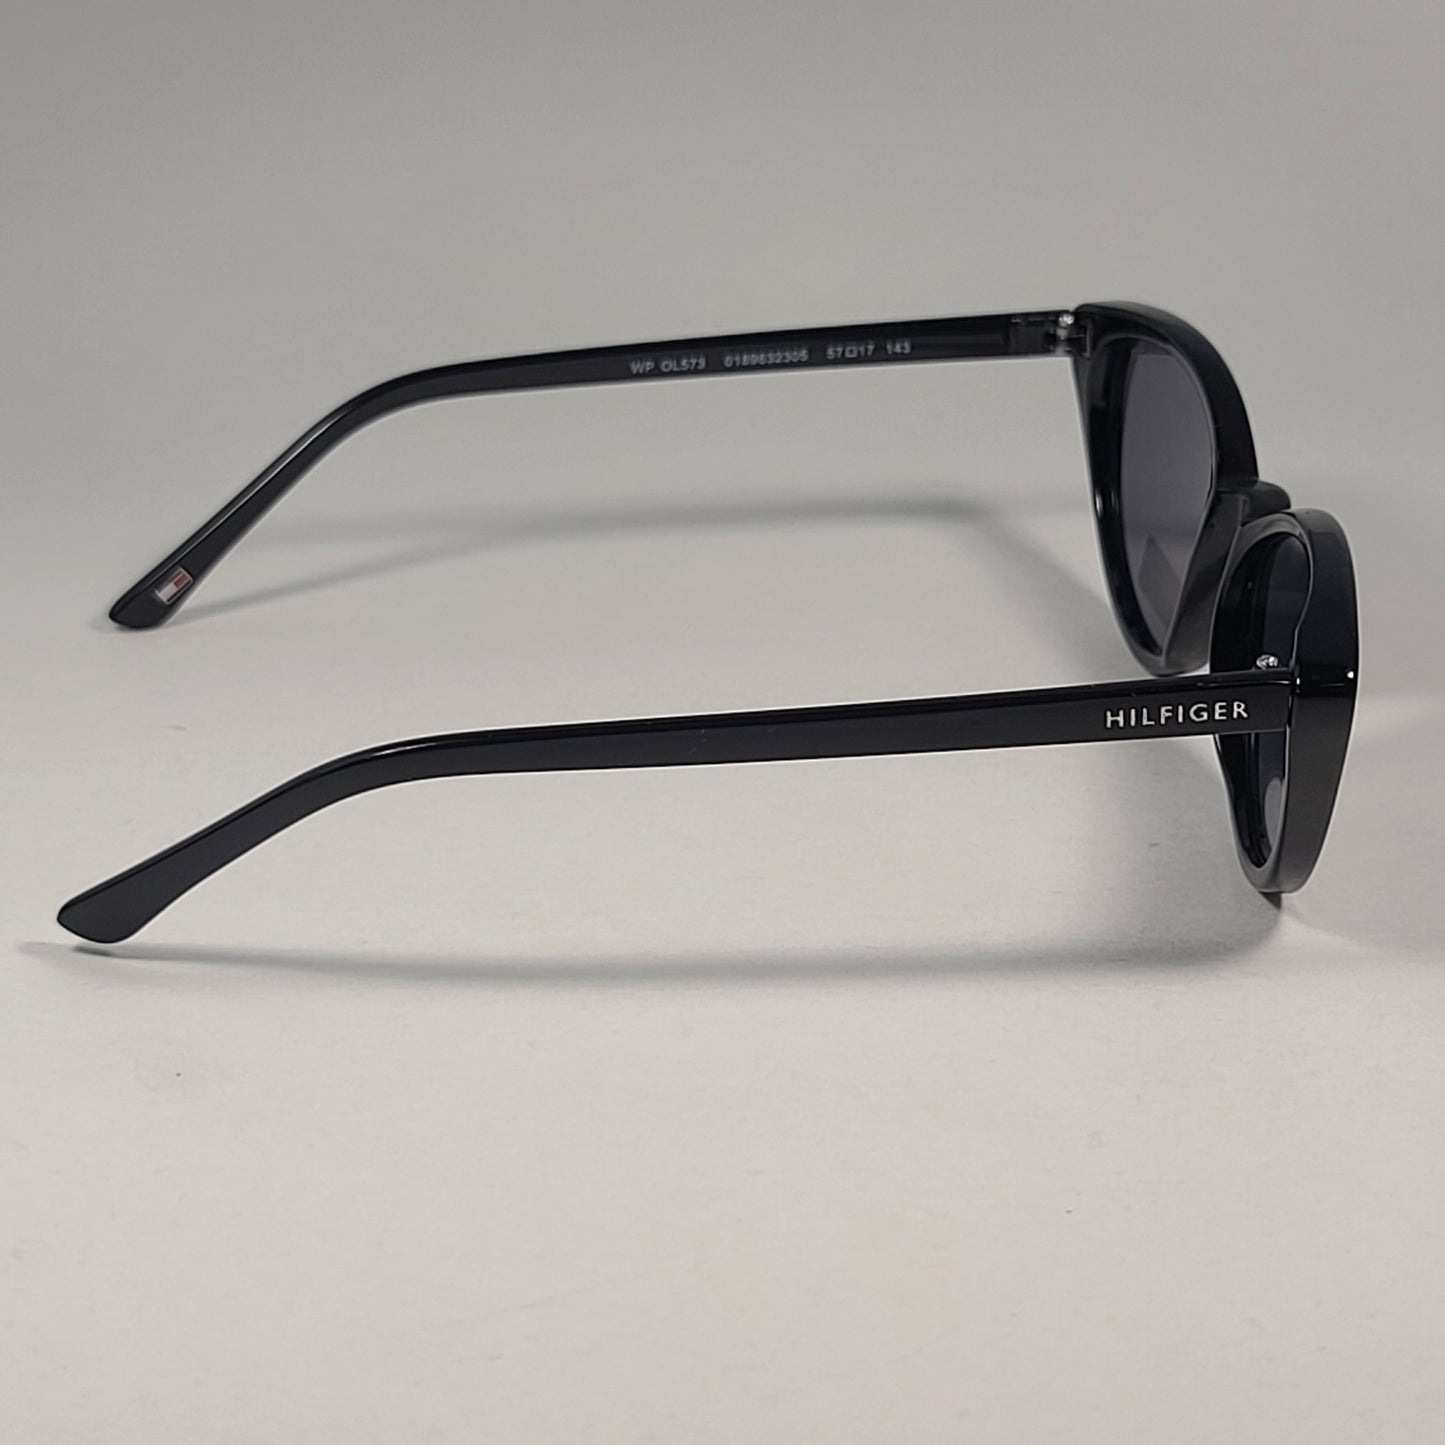 Tommy Hilfiger "Liz" WP OL573 Cat Eye Sunglasses Shiny Black Frame Gray Lens